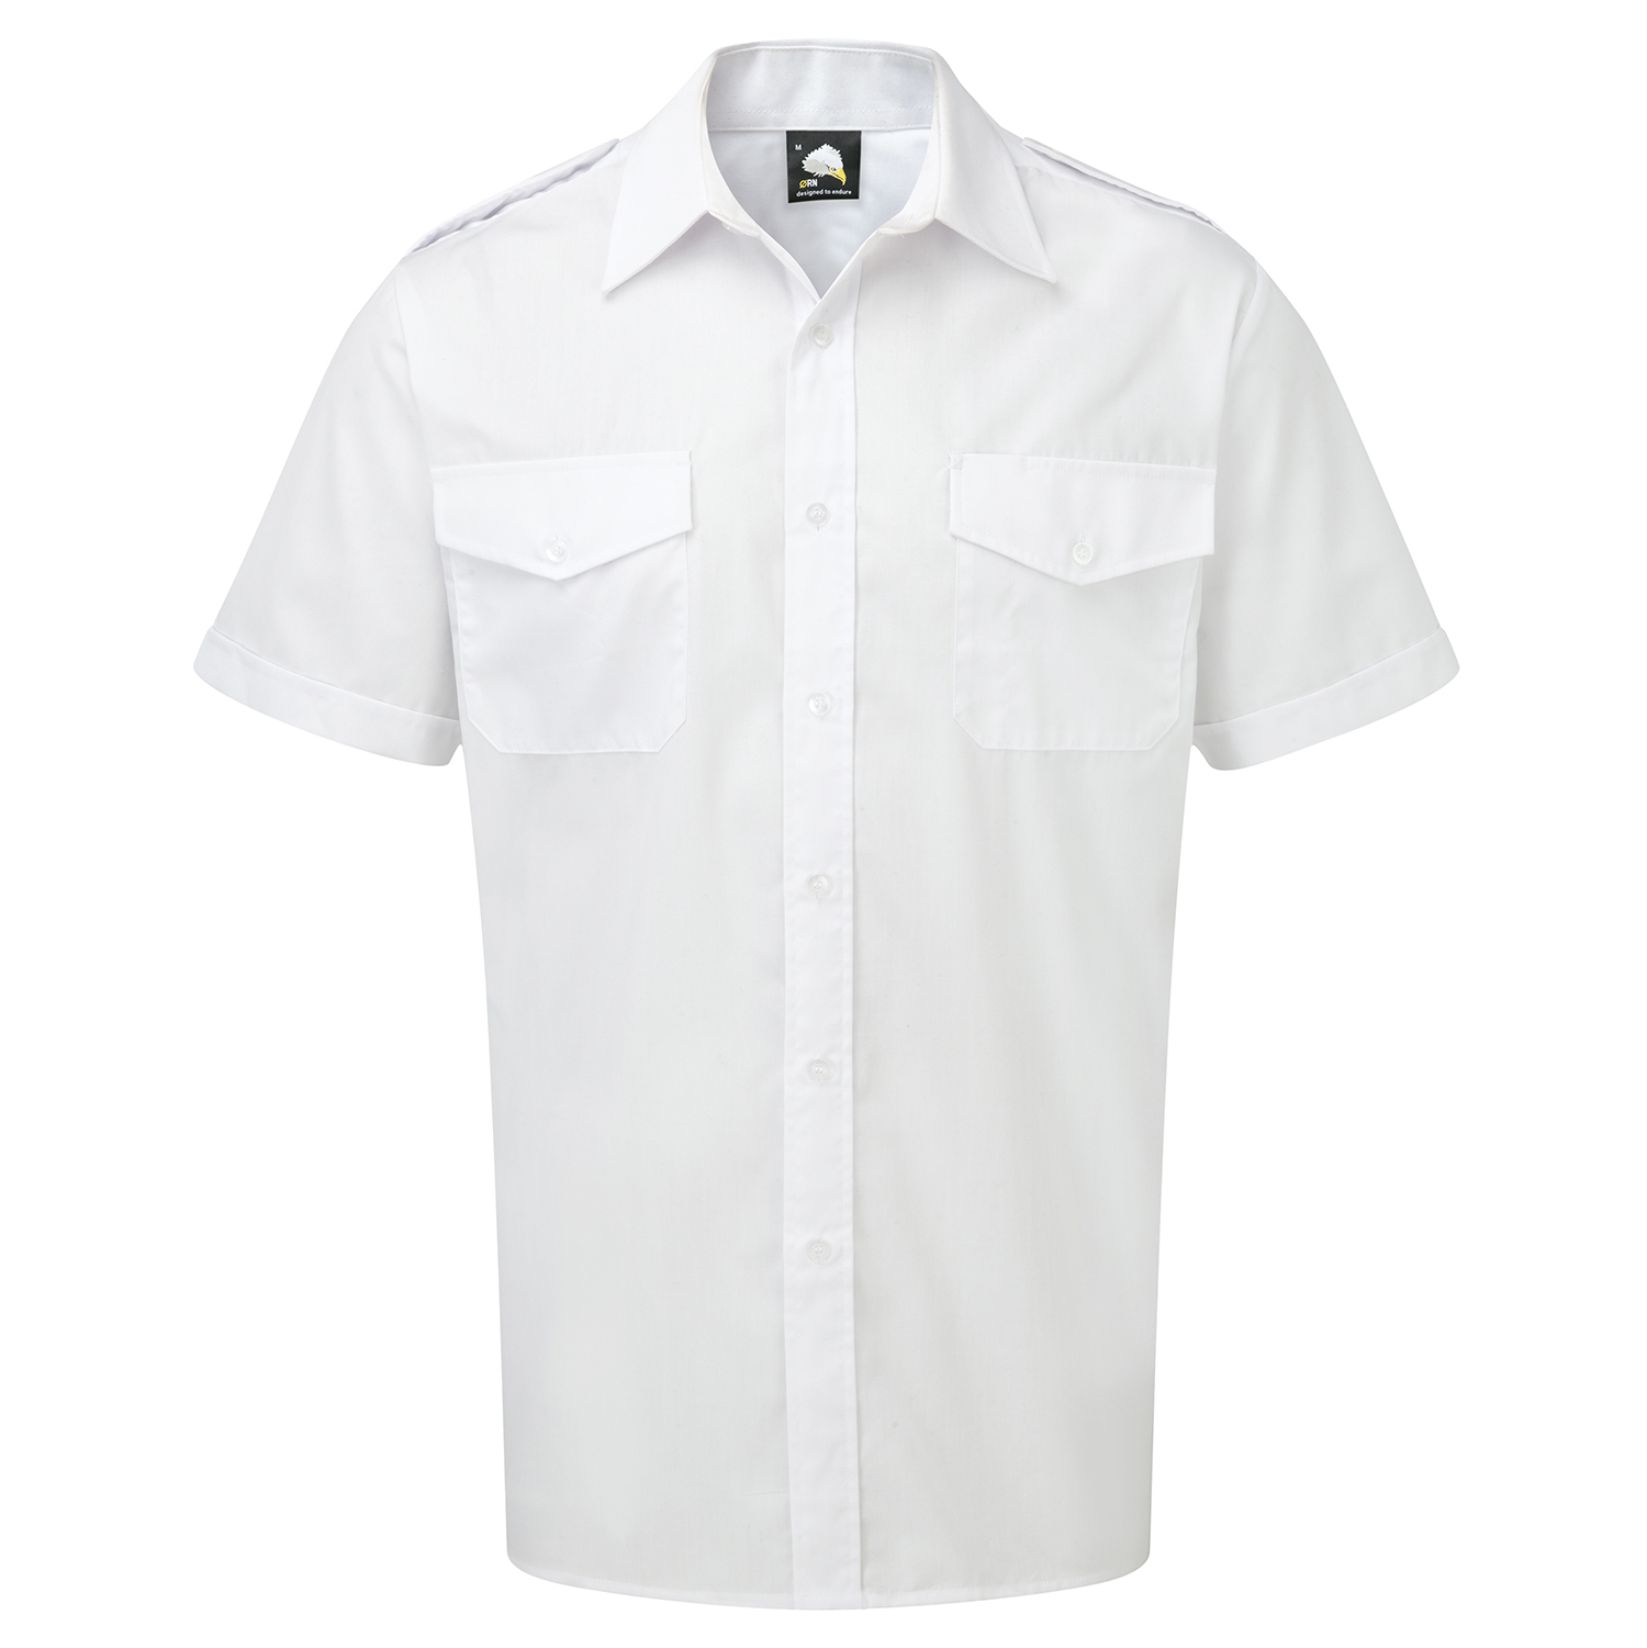 Orn 5800 Short Sleeve Classic Pilot Shirt